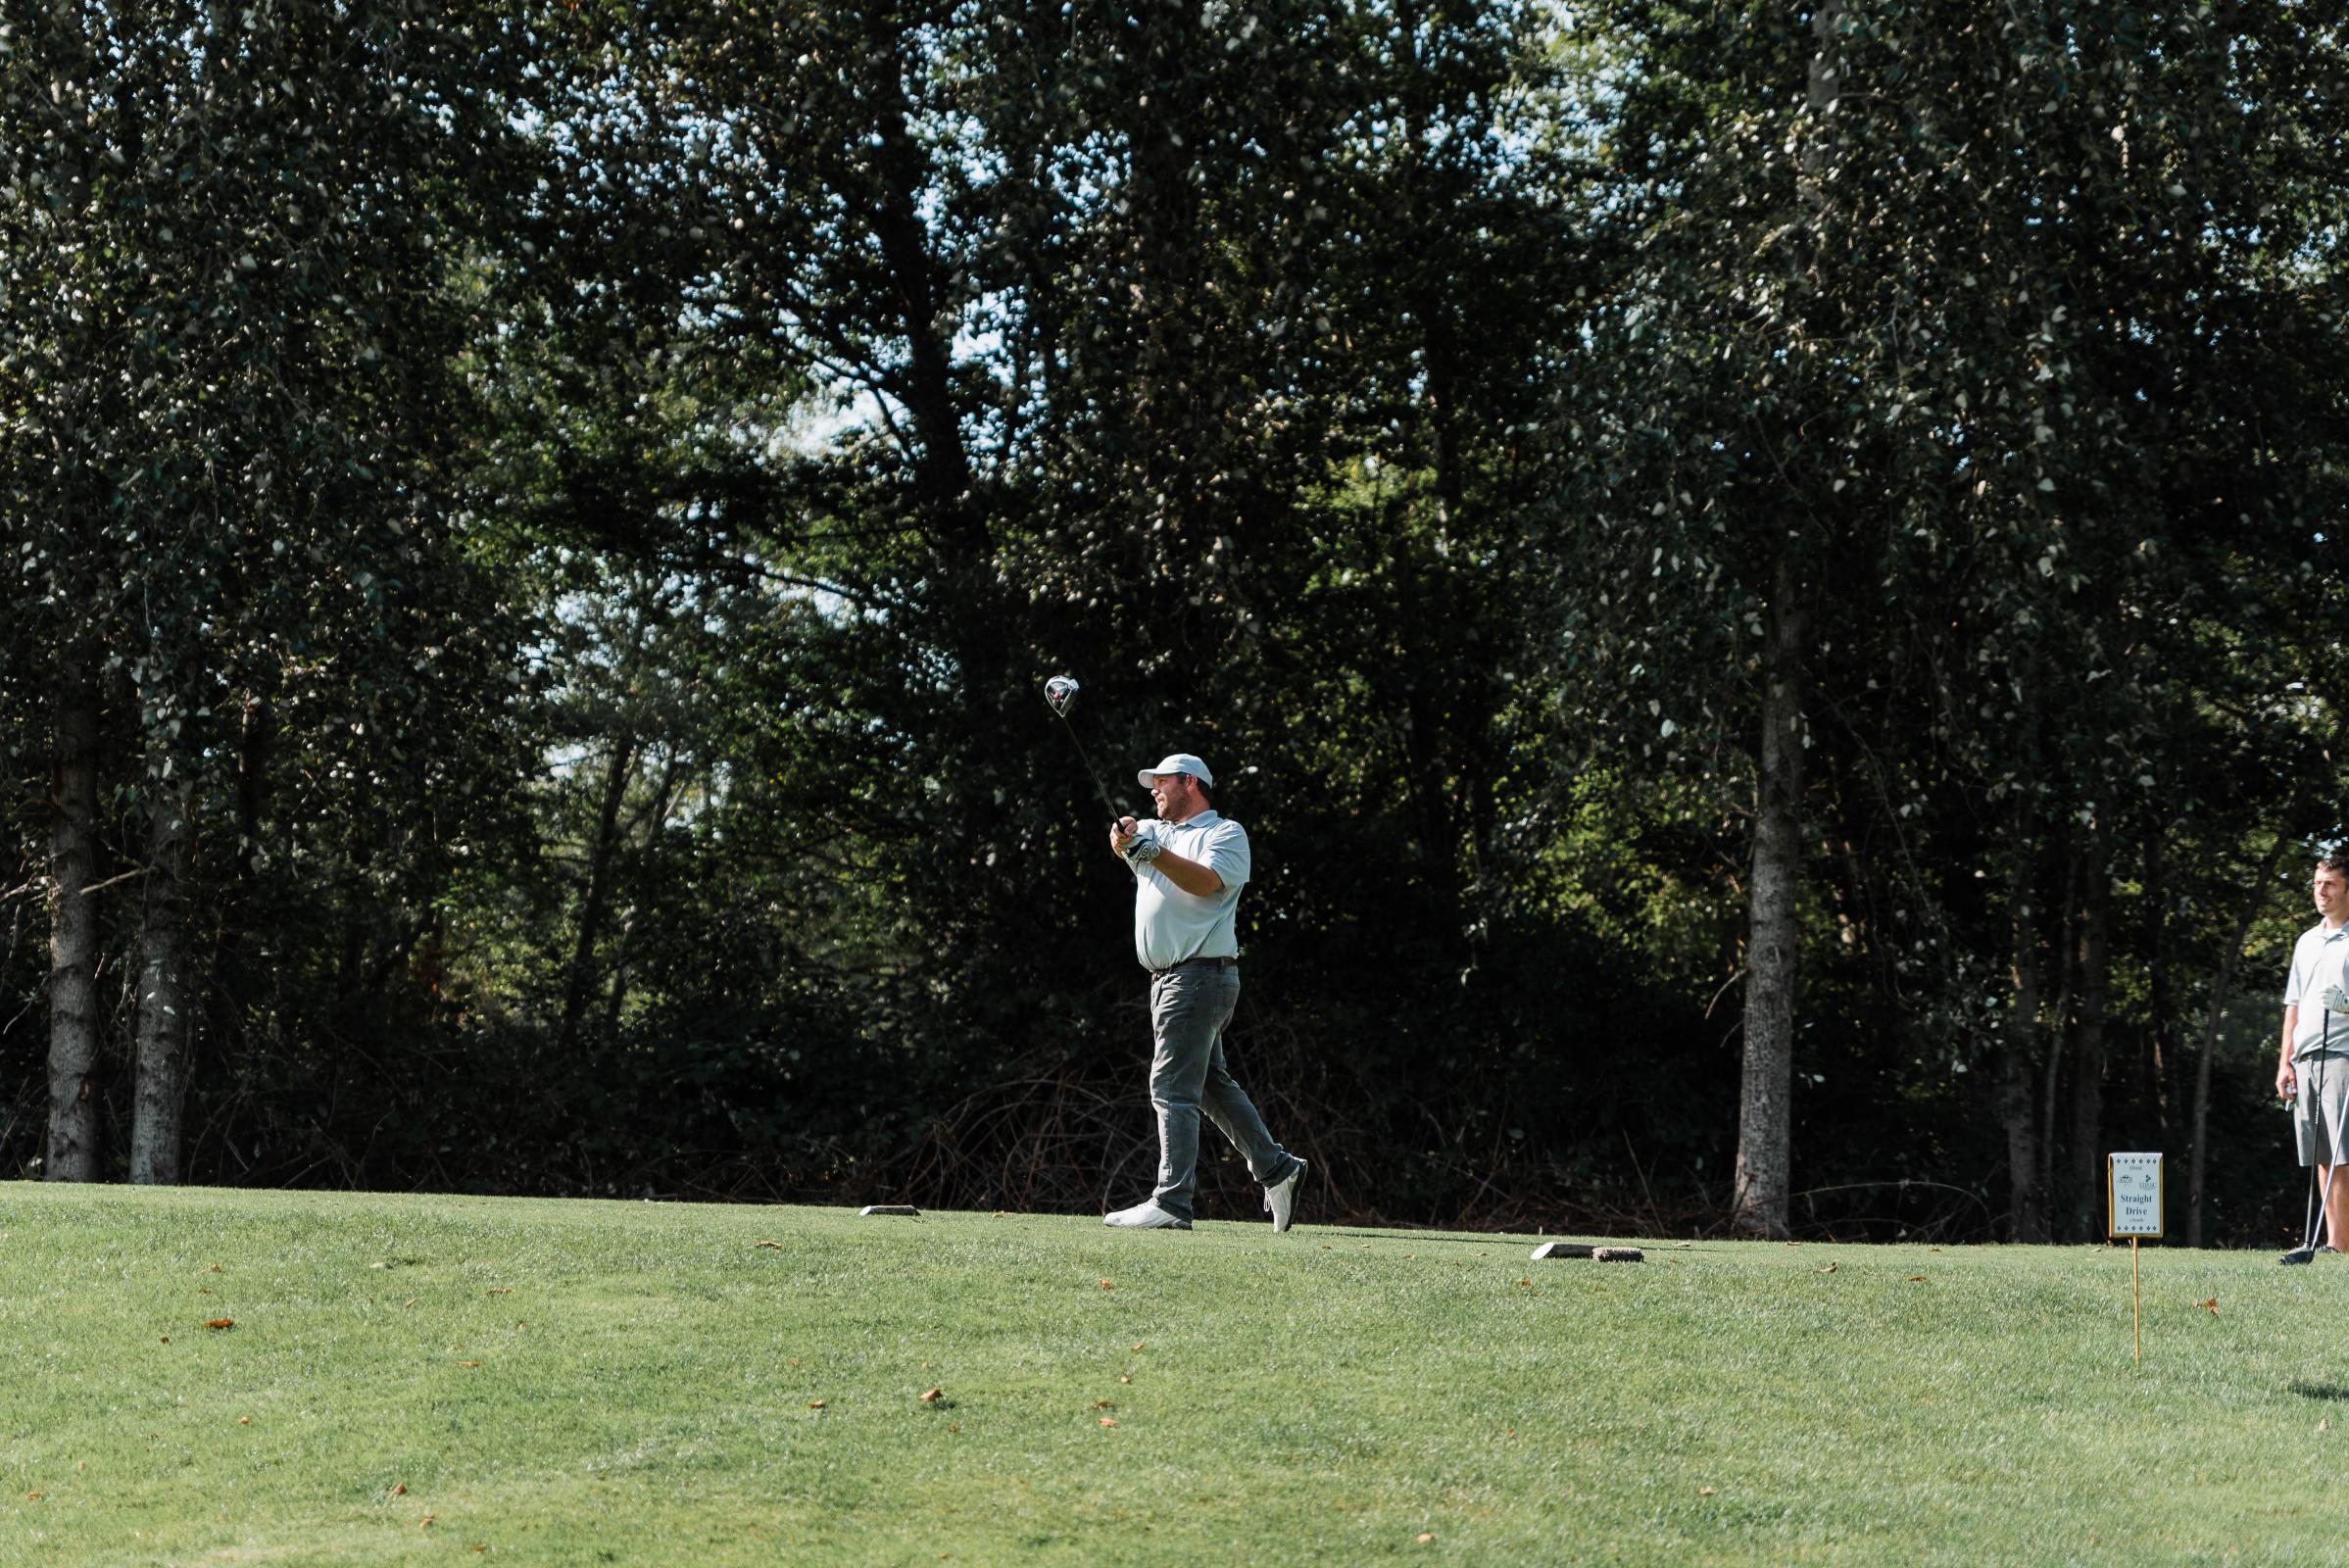 GolfTournament-126's image